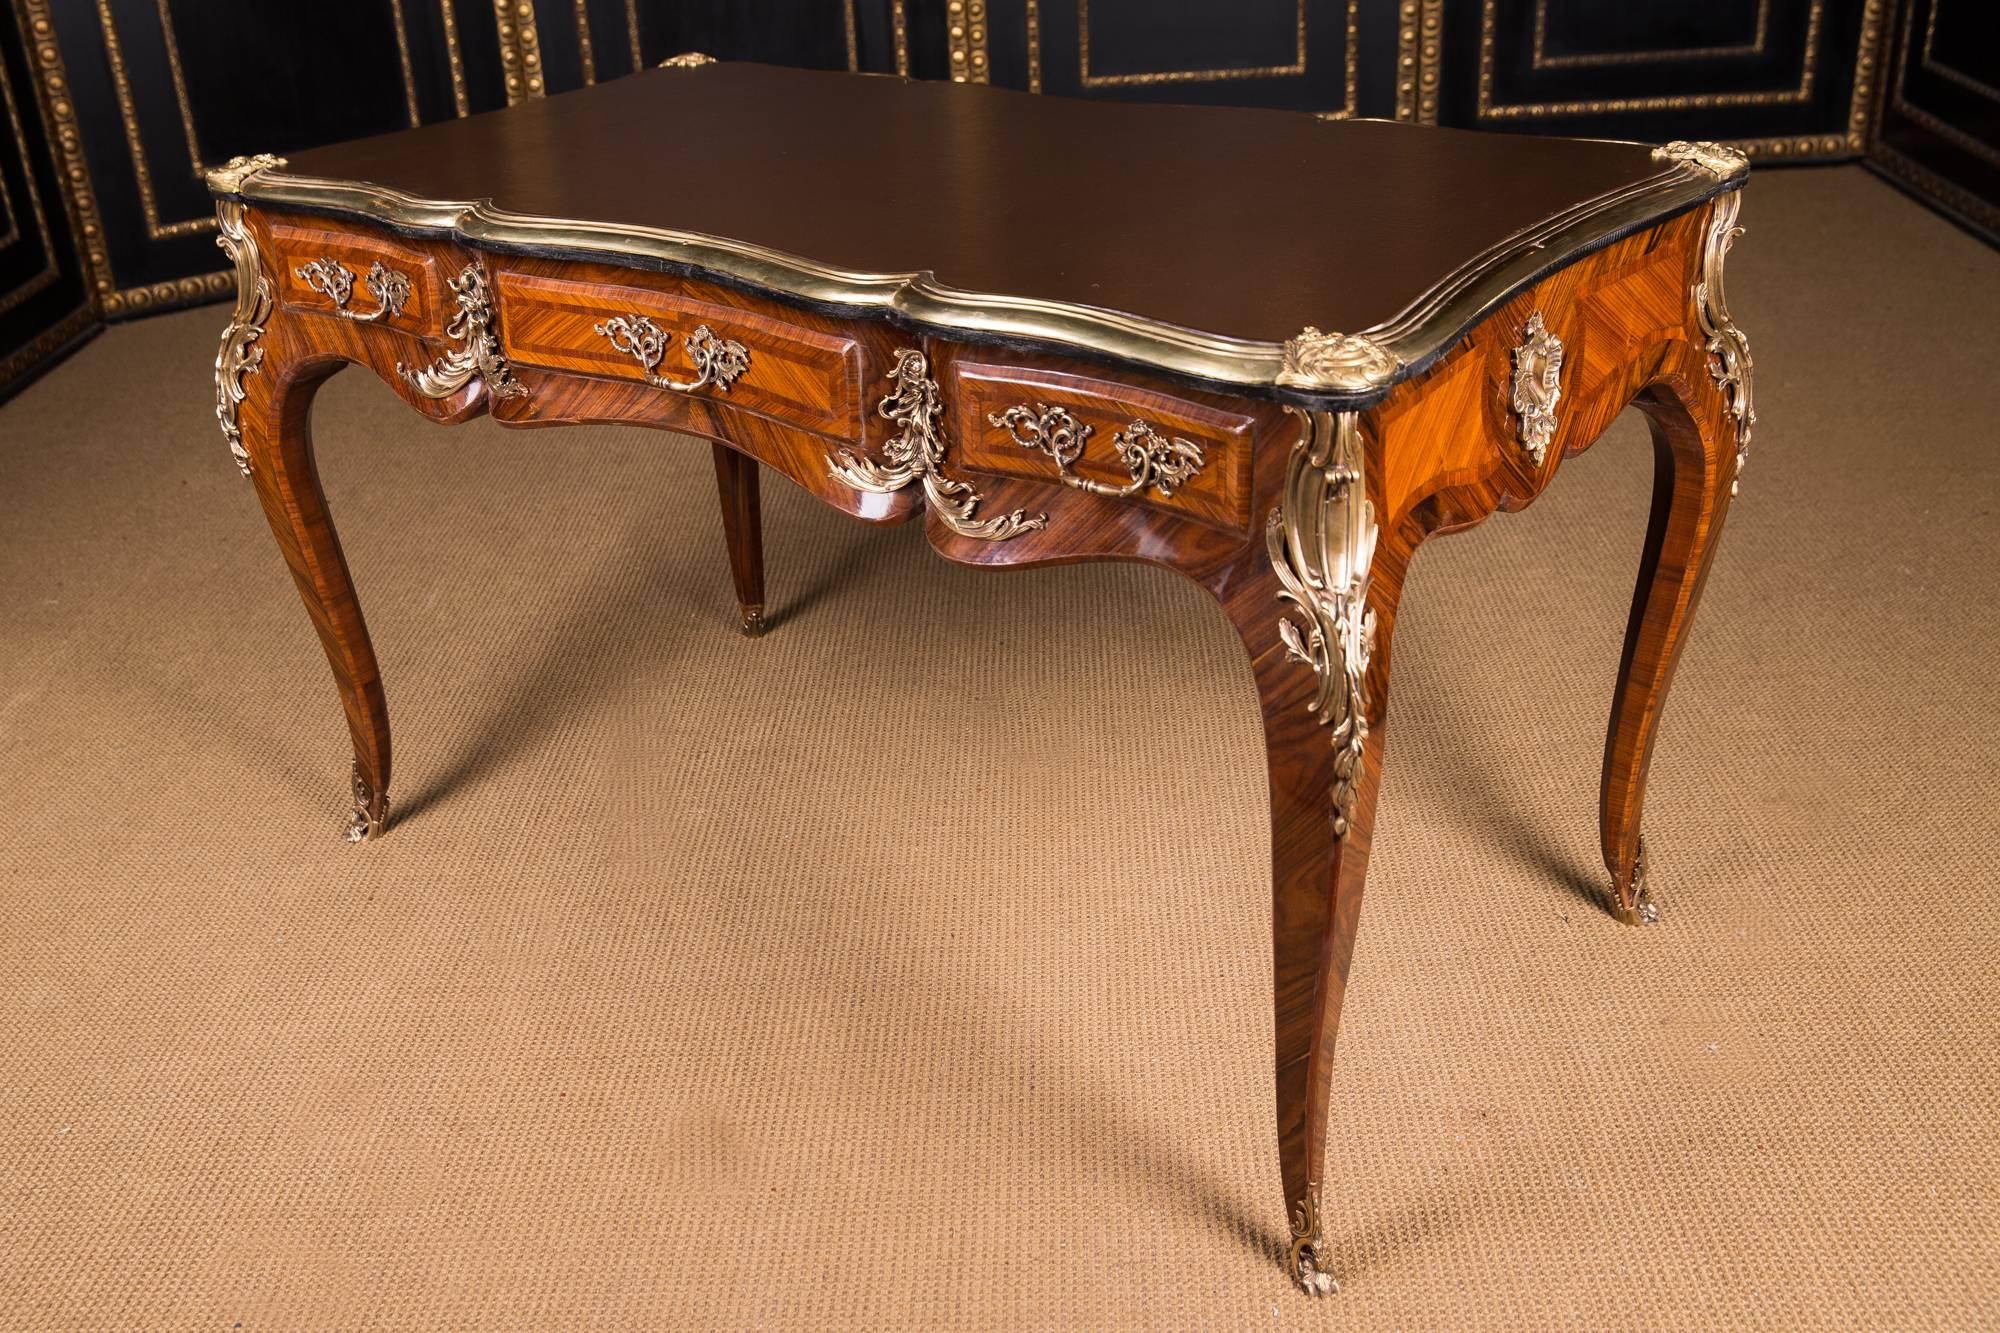 20th Century French Desk Bureau Plat in the Louis XV Style Bois-satiné Veneer 4